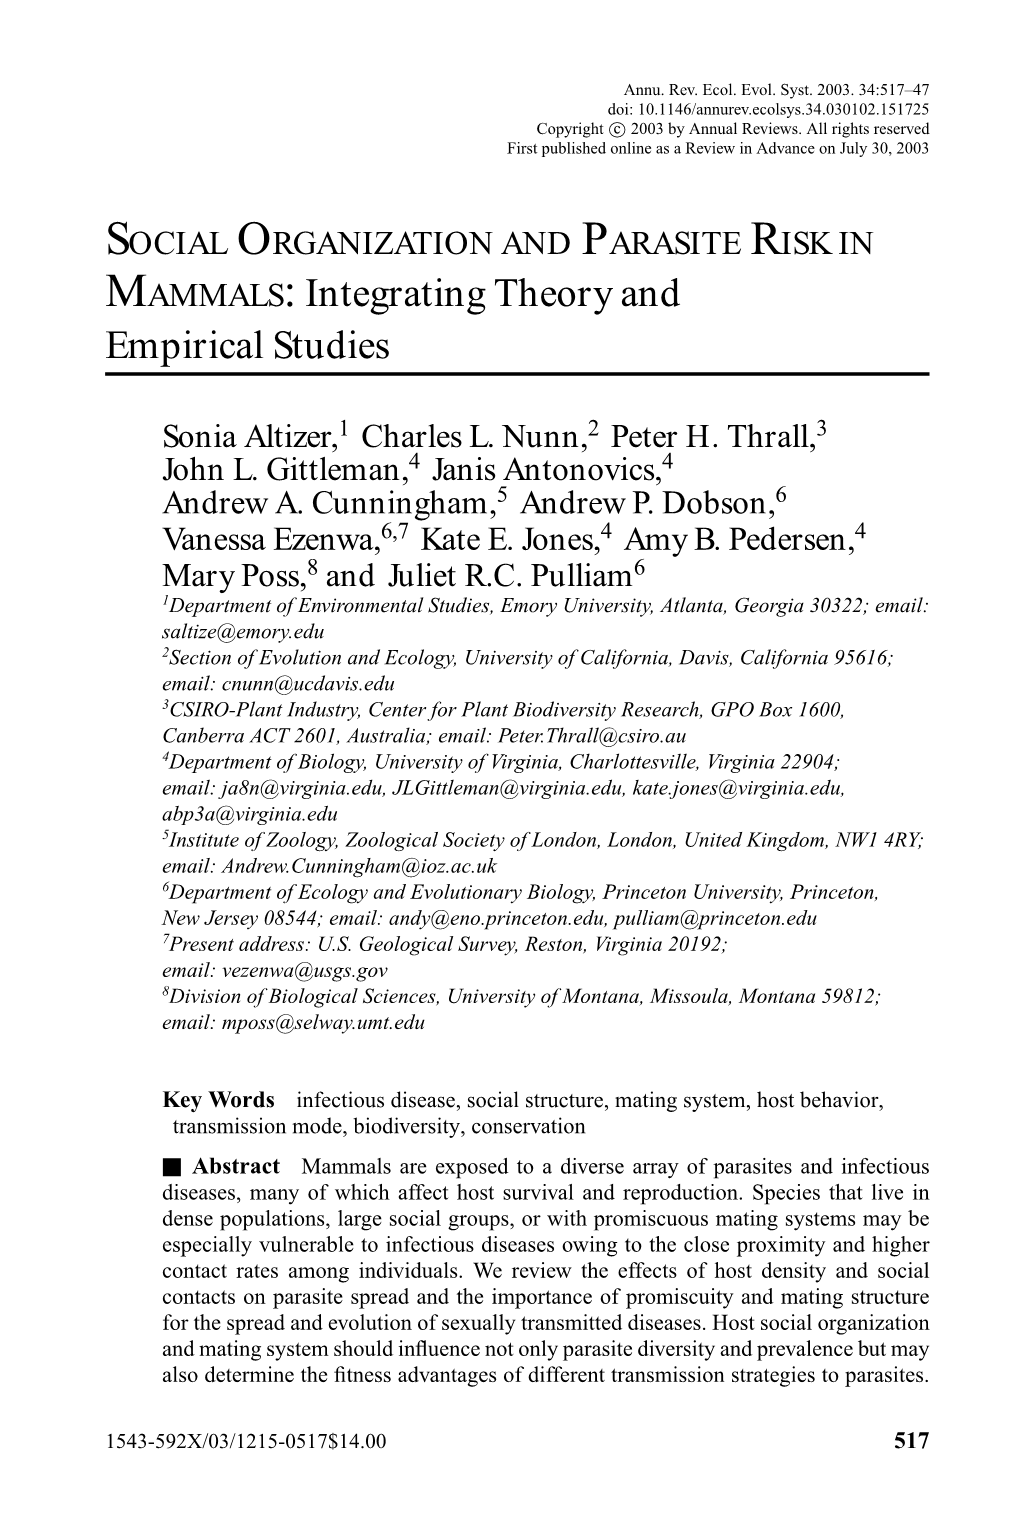 MAMMALS: Integrating Theory and Empirical Studies